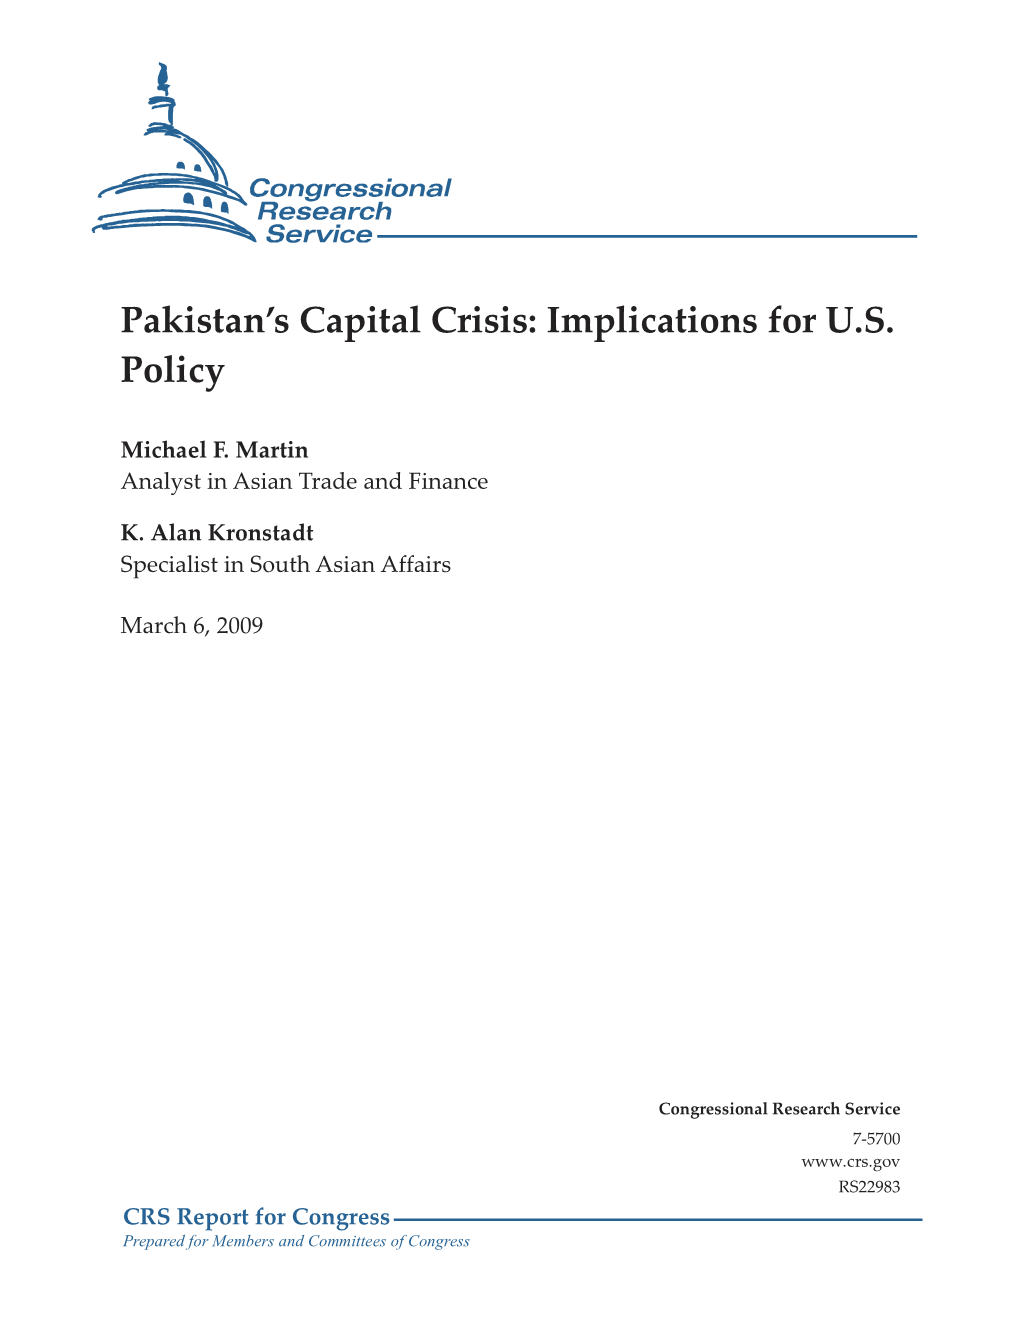 Pakistan's Capital Crisis: Implications for U.S. Policy